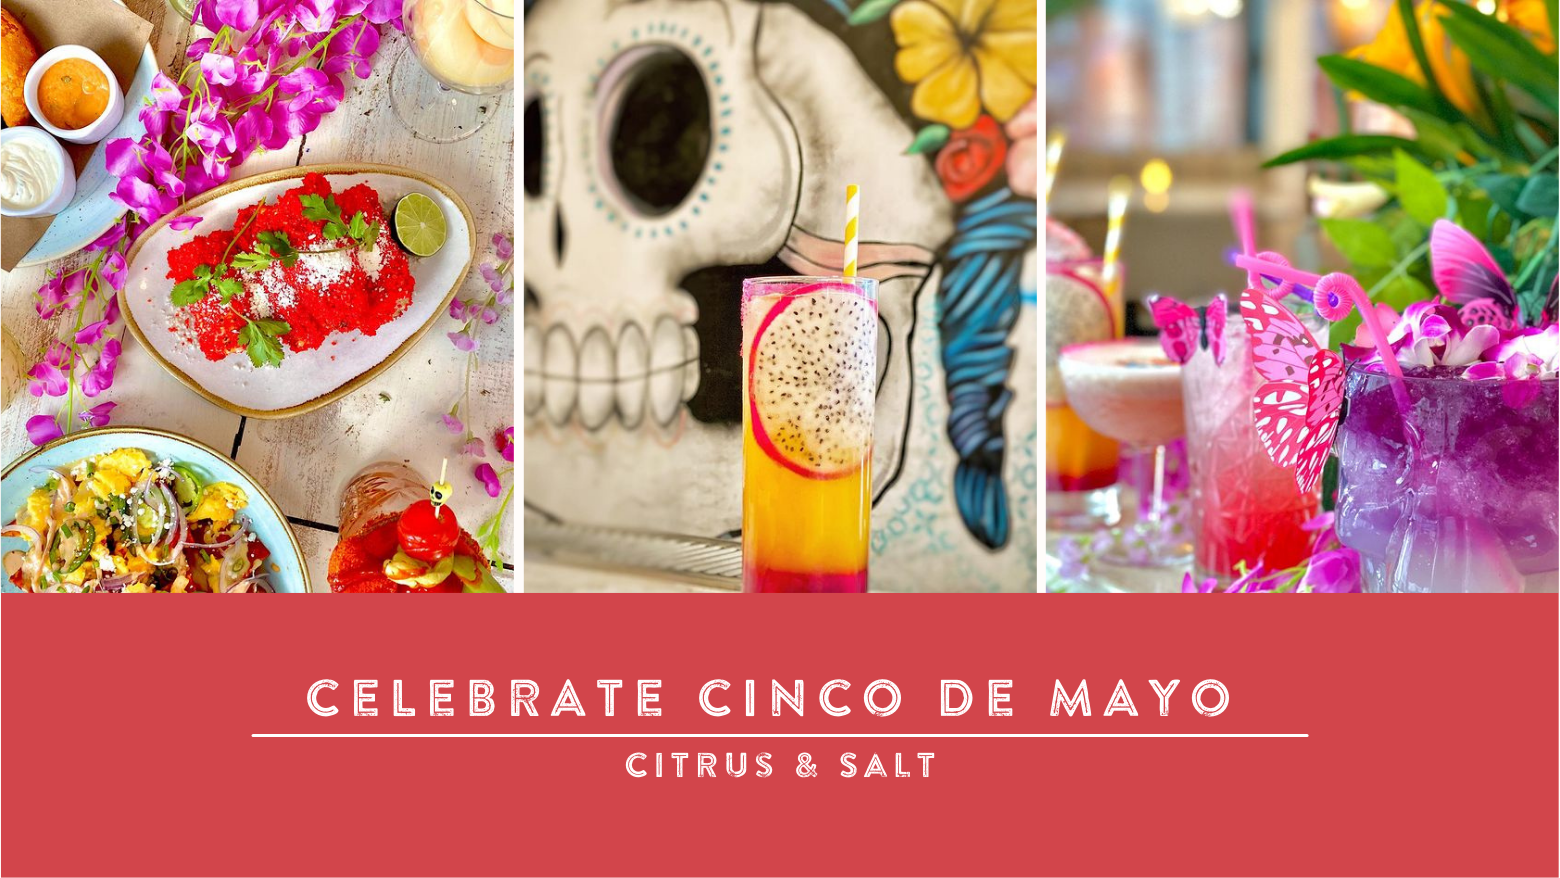 Celebrate Cinco De Mayo with Citrus & Salt Boston Restaurant News and